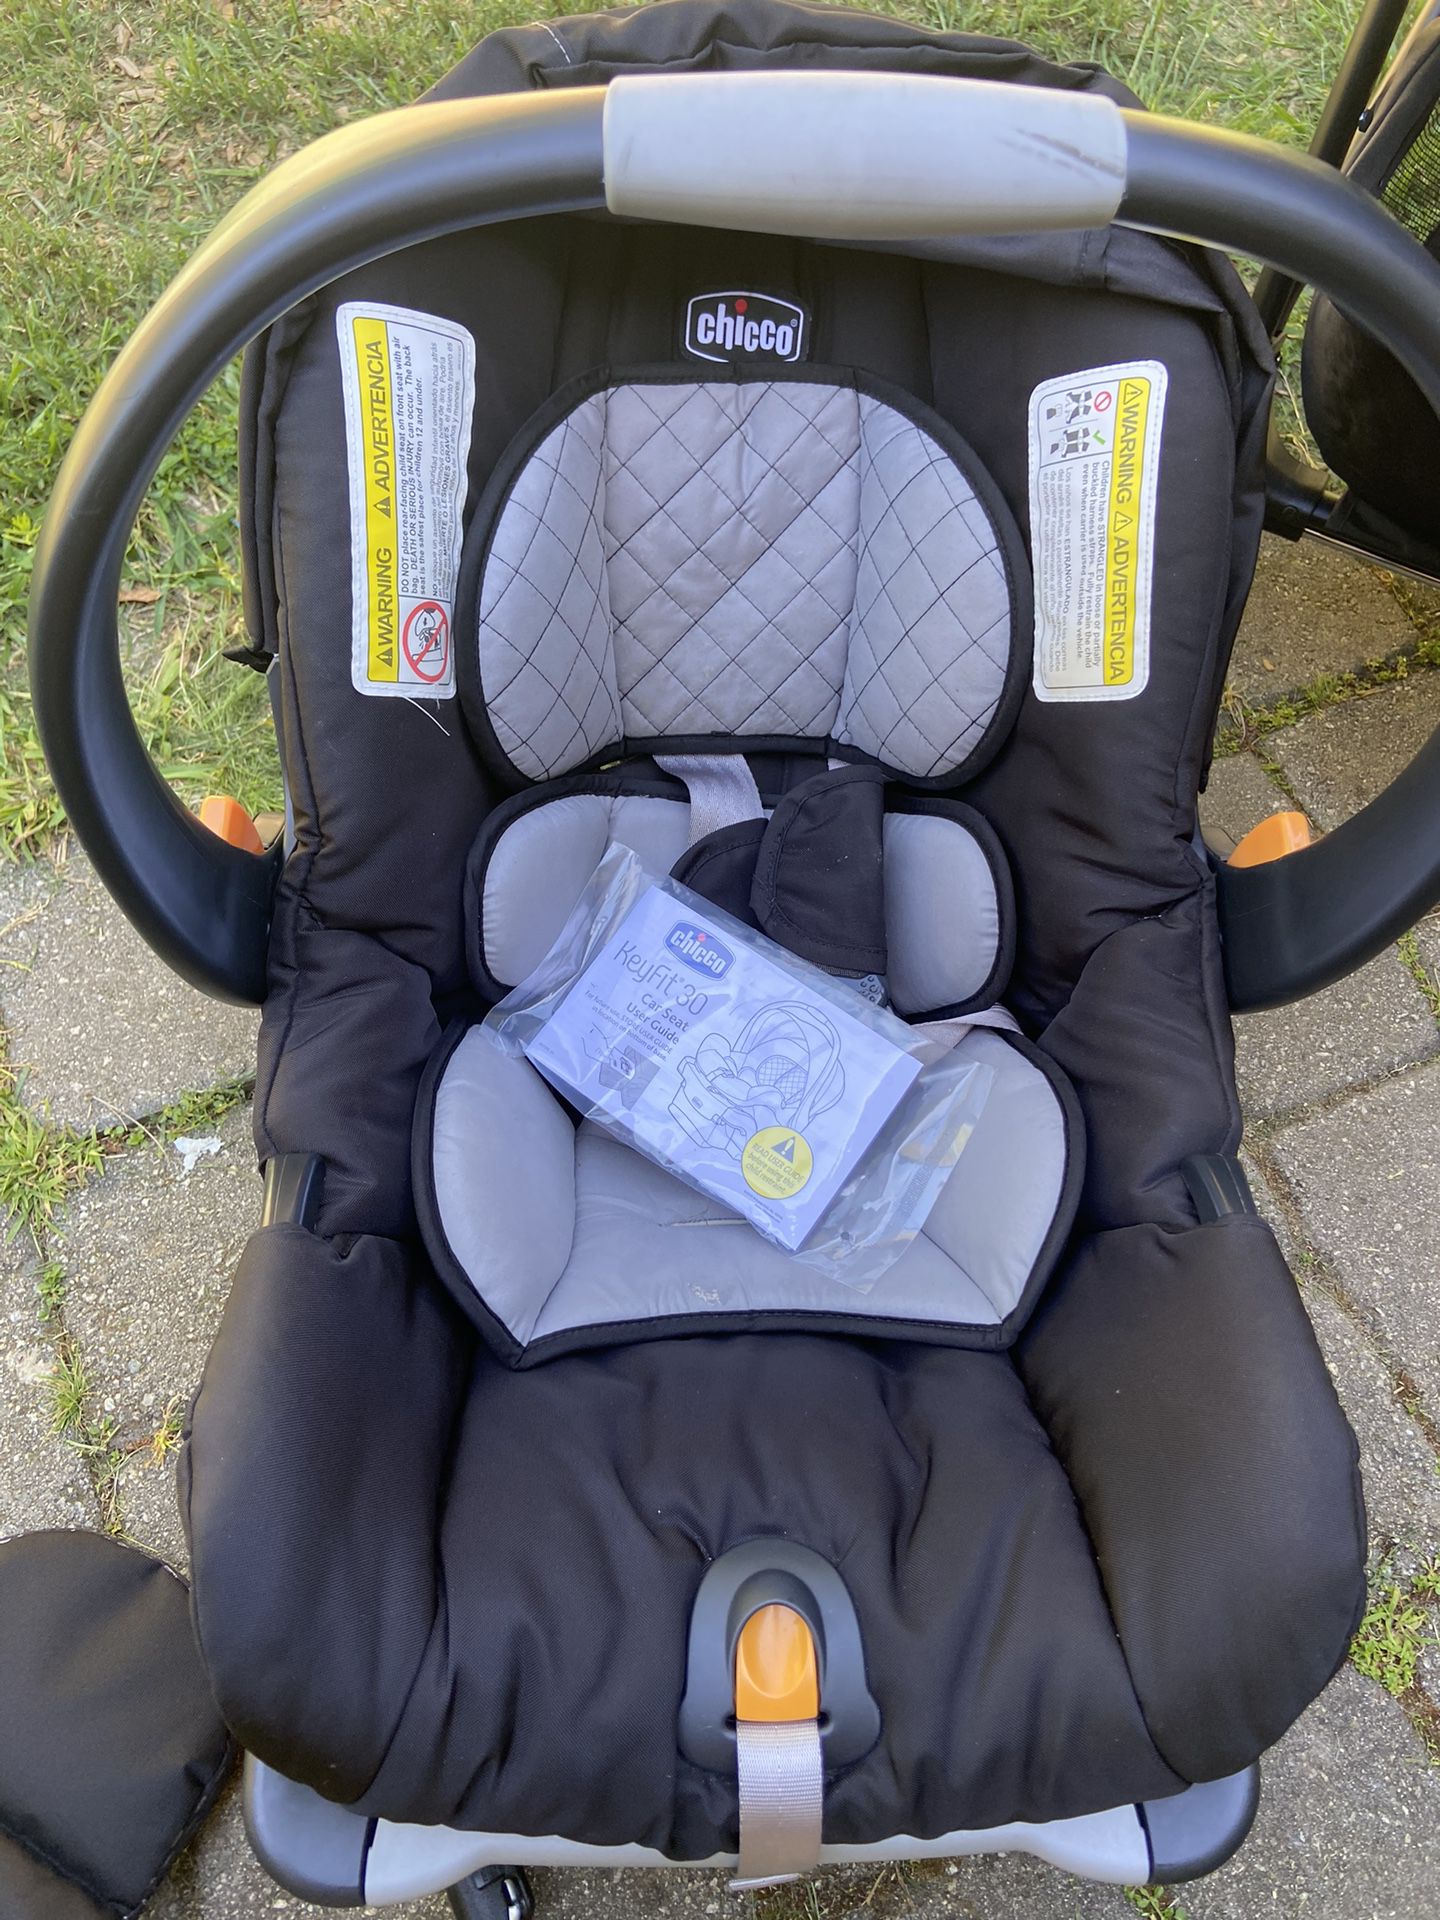 Newborn Car Seat W/Base